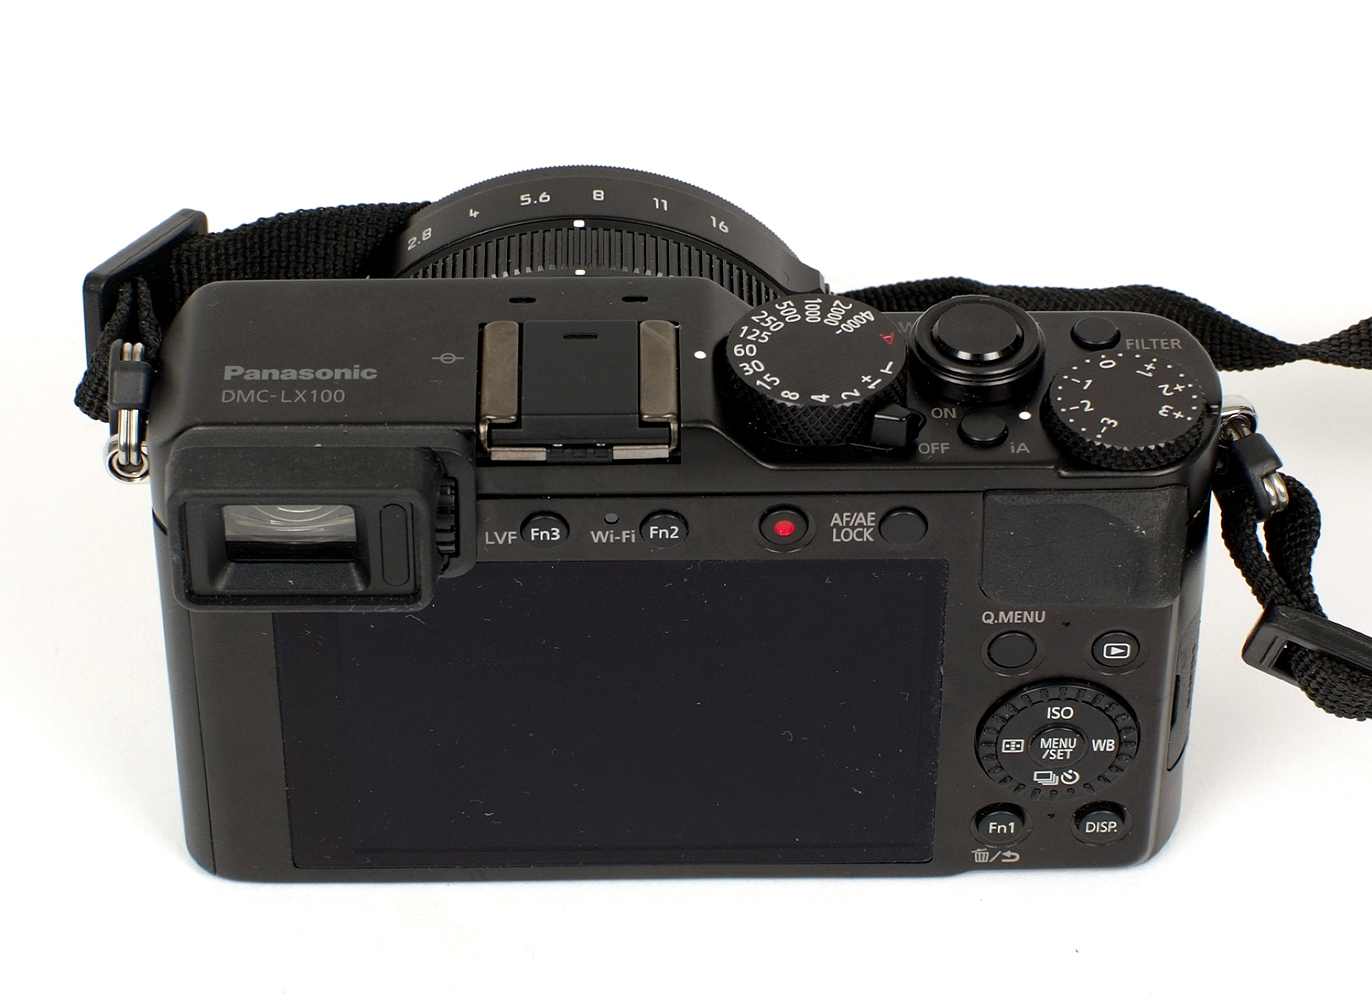 Panasonic DMC-LX100 Digital Camera. (condition 4E) With Leica DC Vario-Summilux 24-75mm f1.7-2. - Image 3 of 3